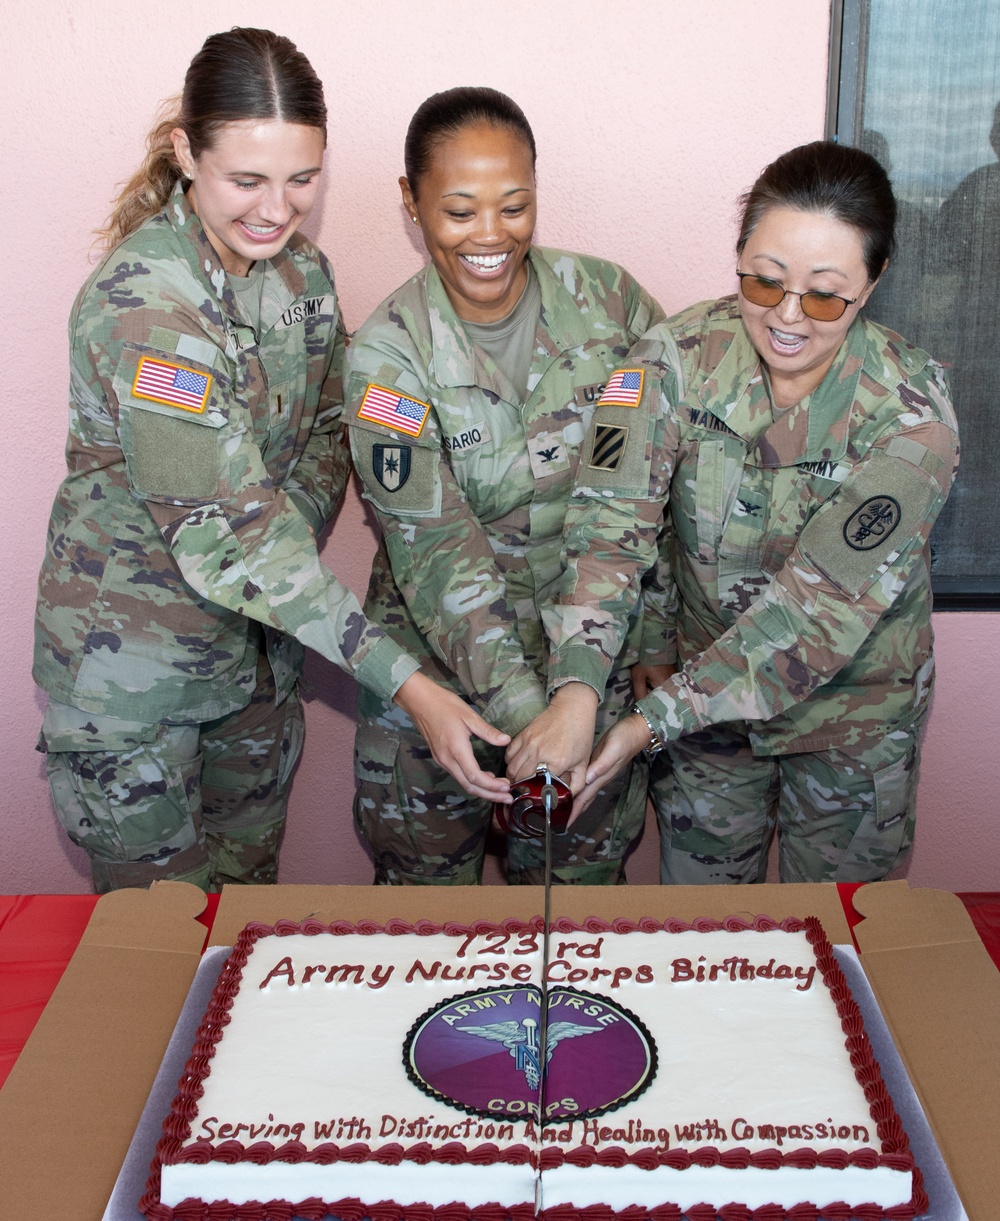 123rd Army Nurse Corps Birthday Celebration at Tripler Army Medical Center